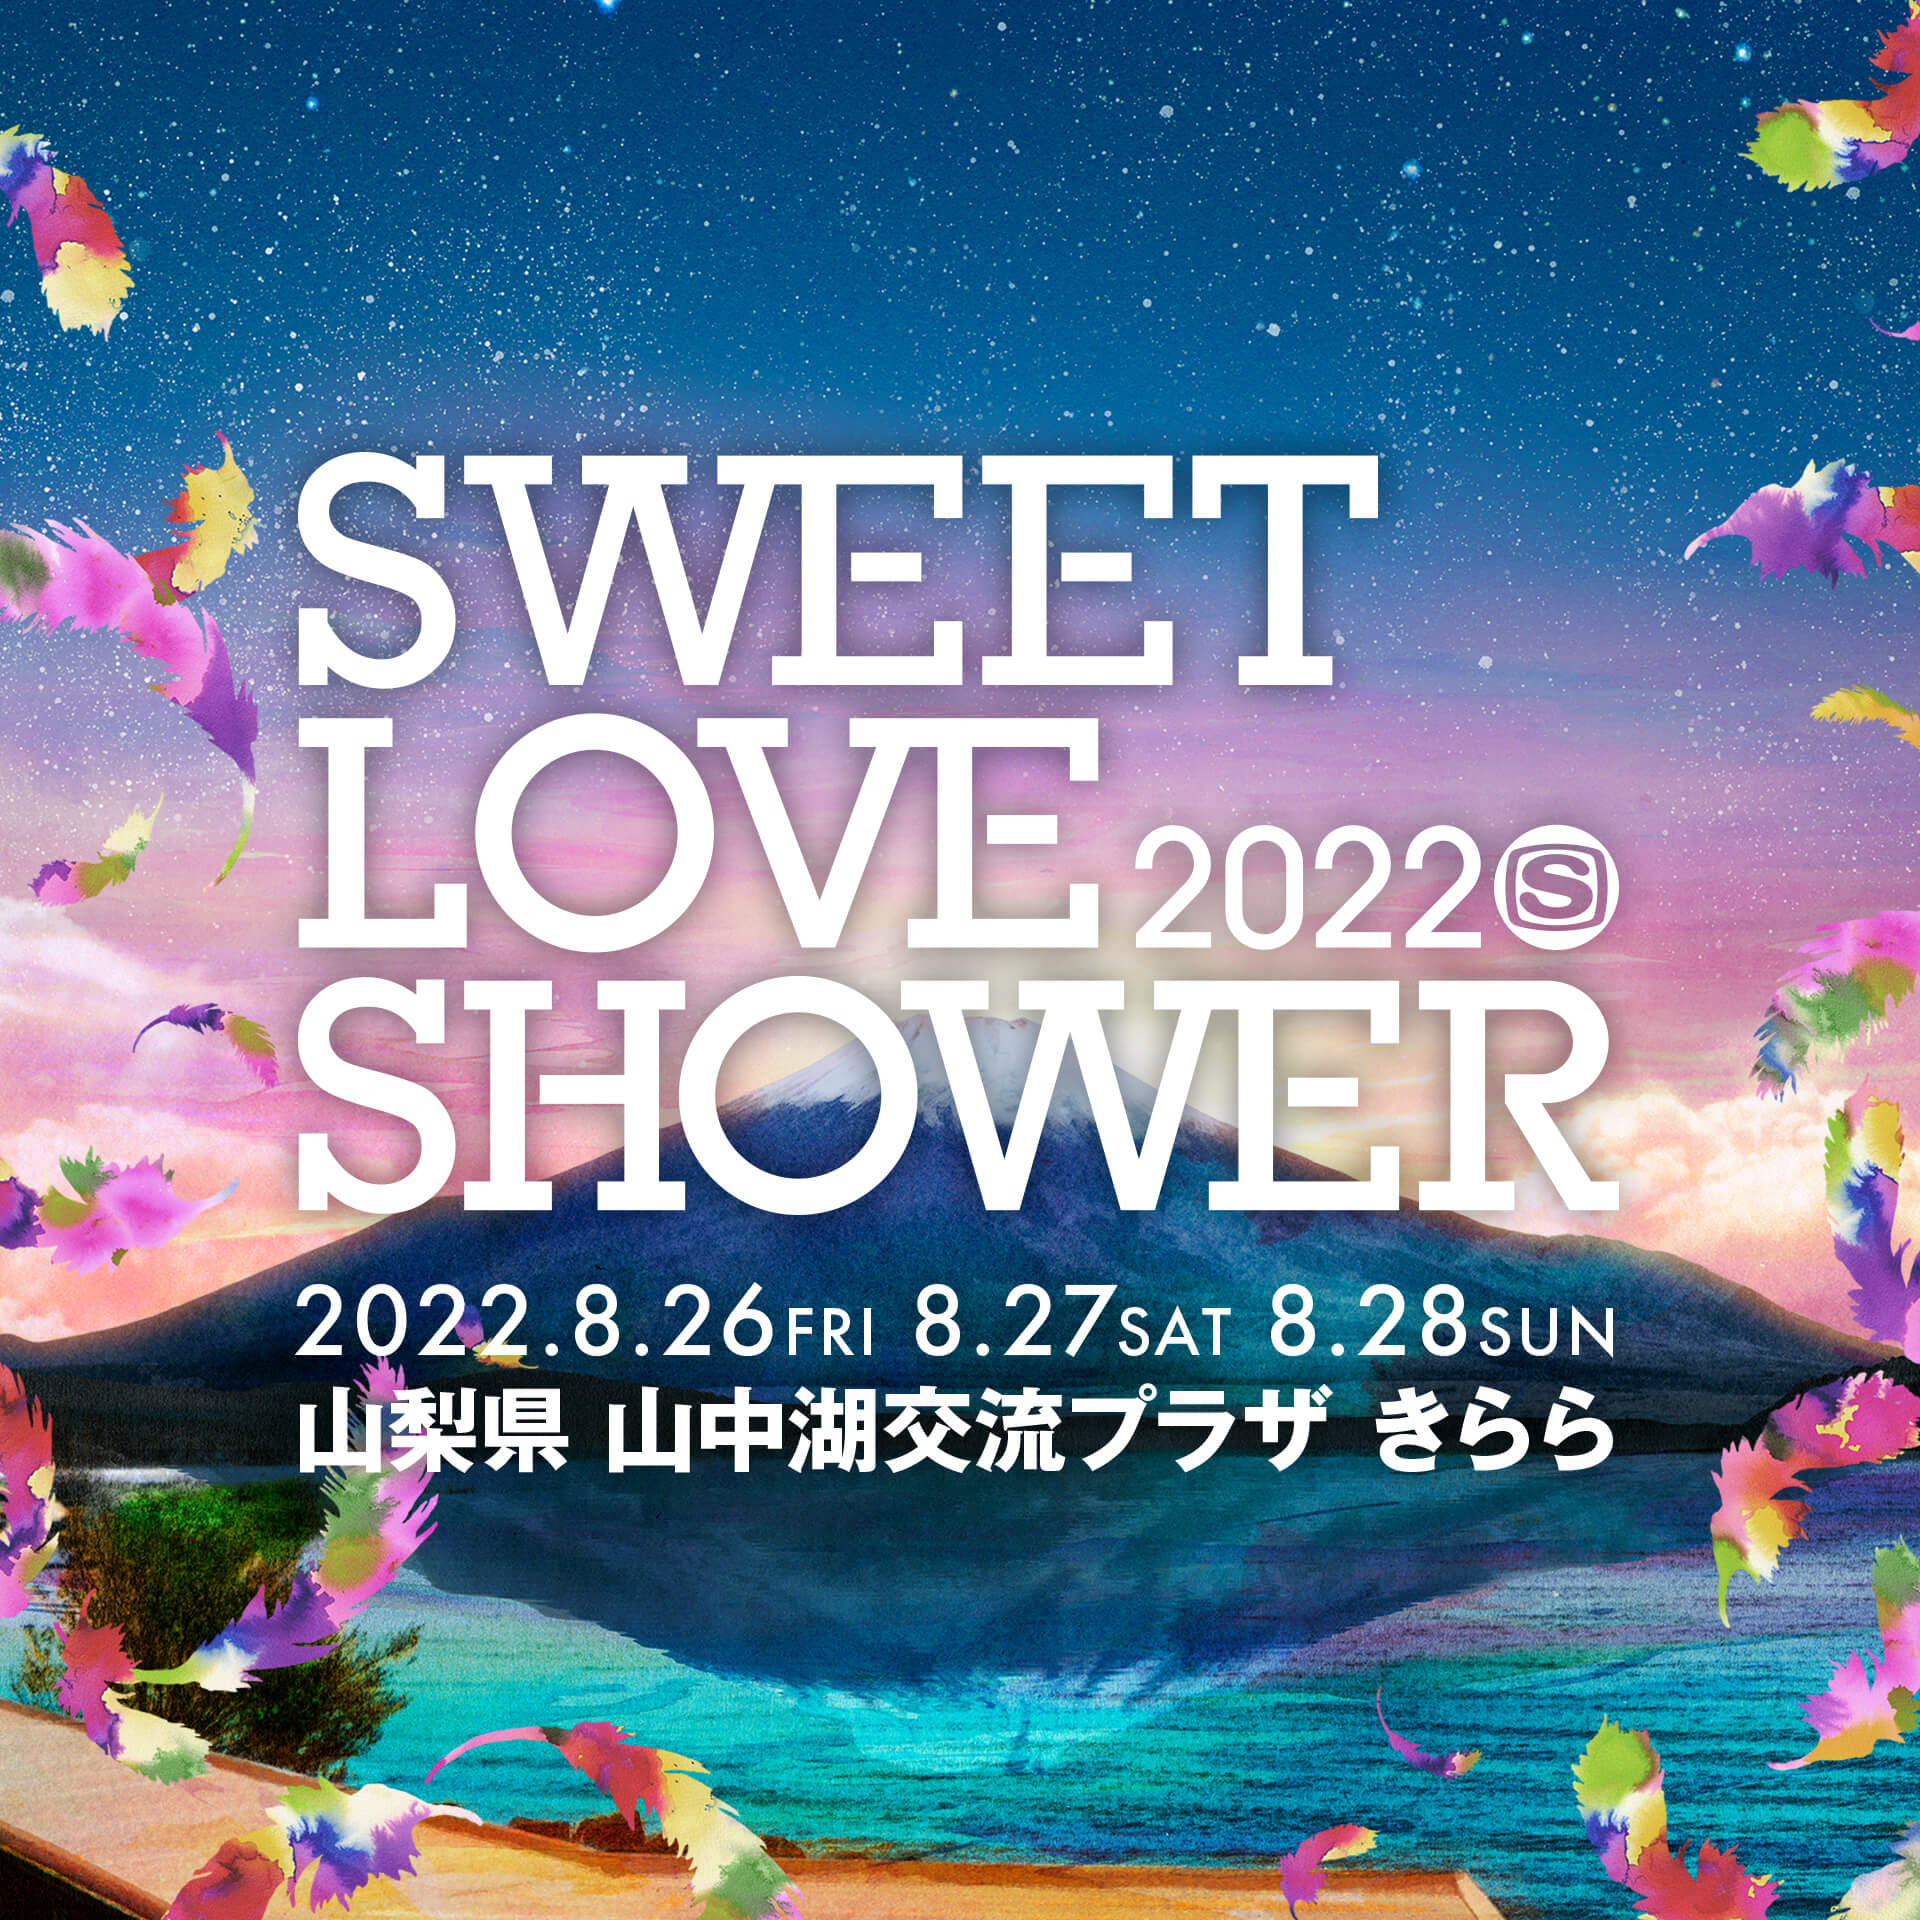 SWEET LOVE SHOWER 2022チケット受付 - イープラス